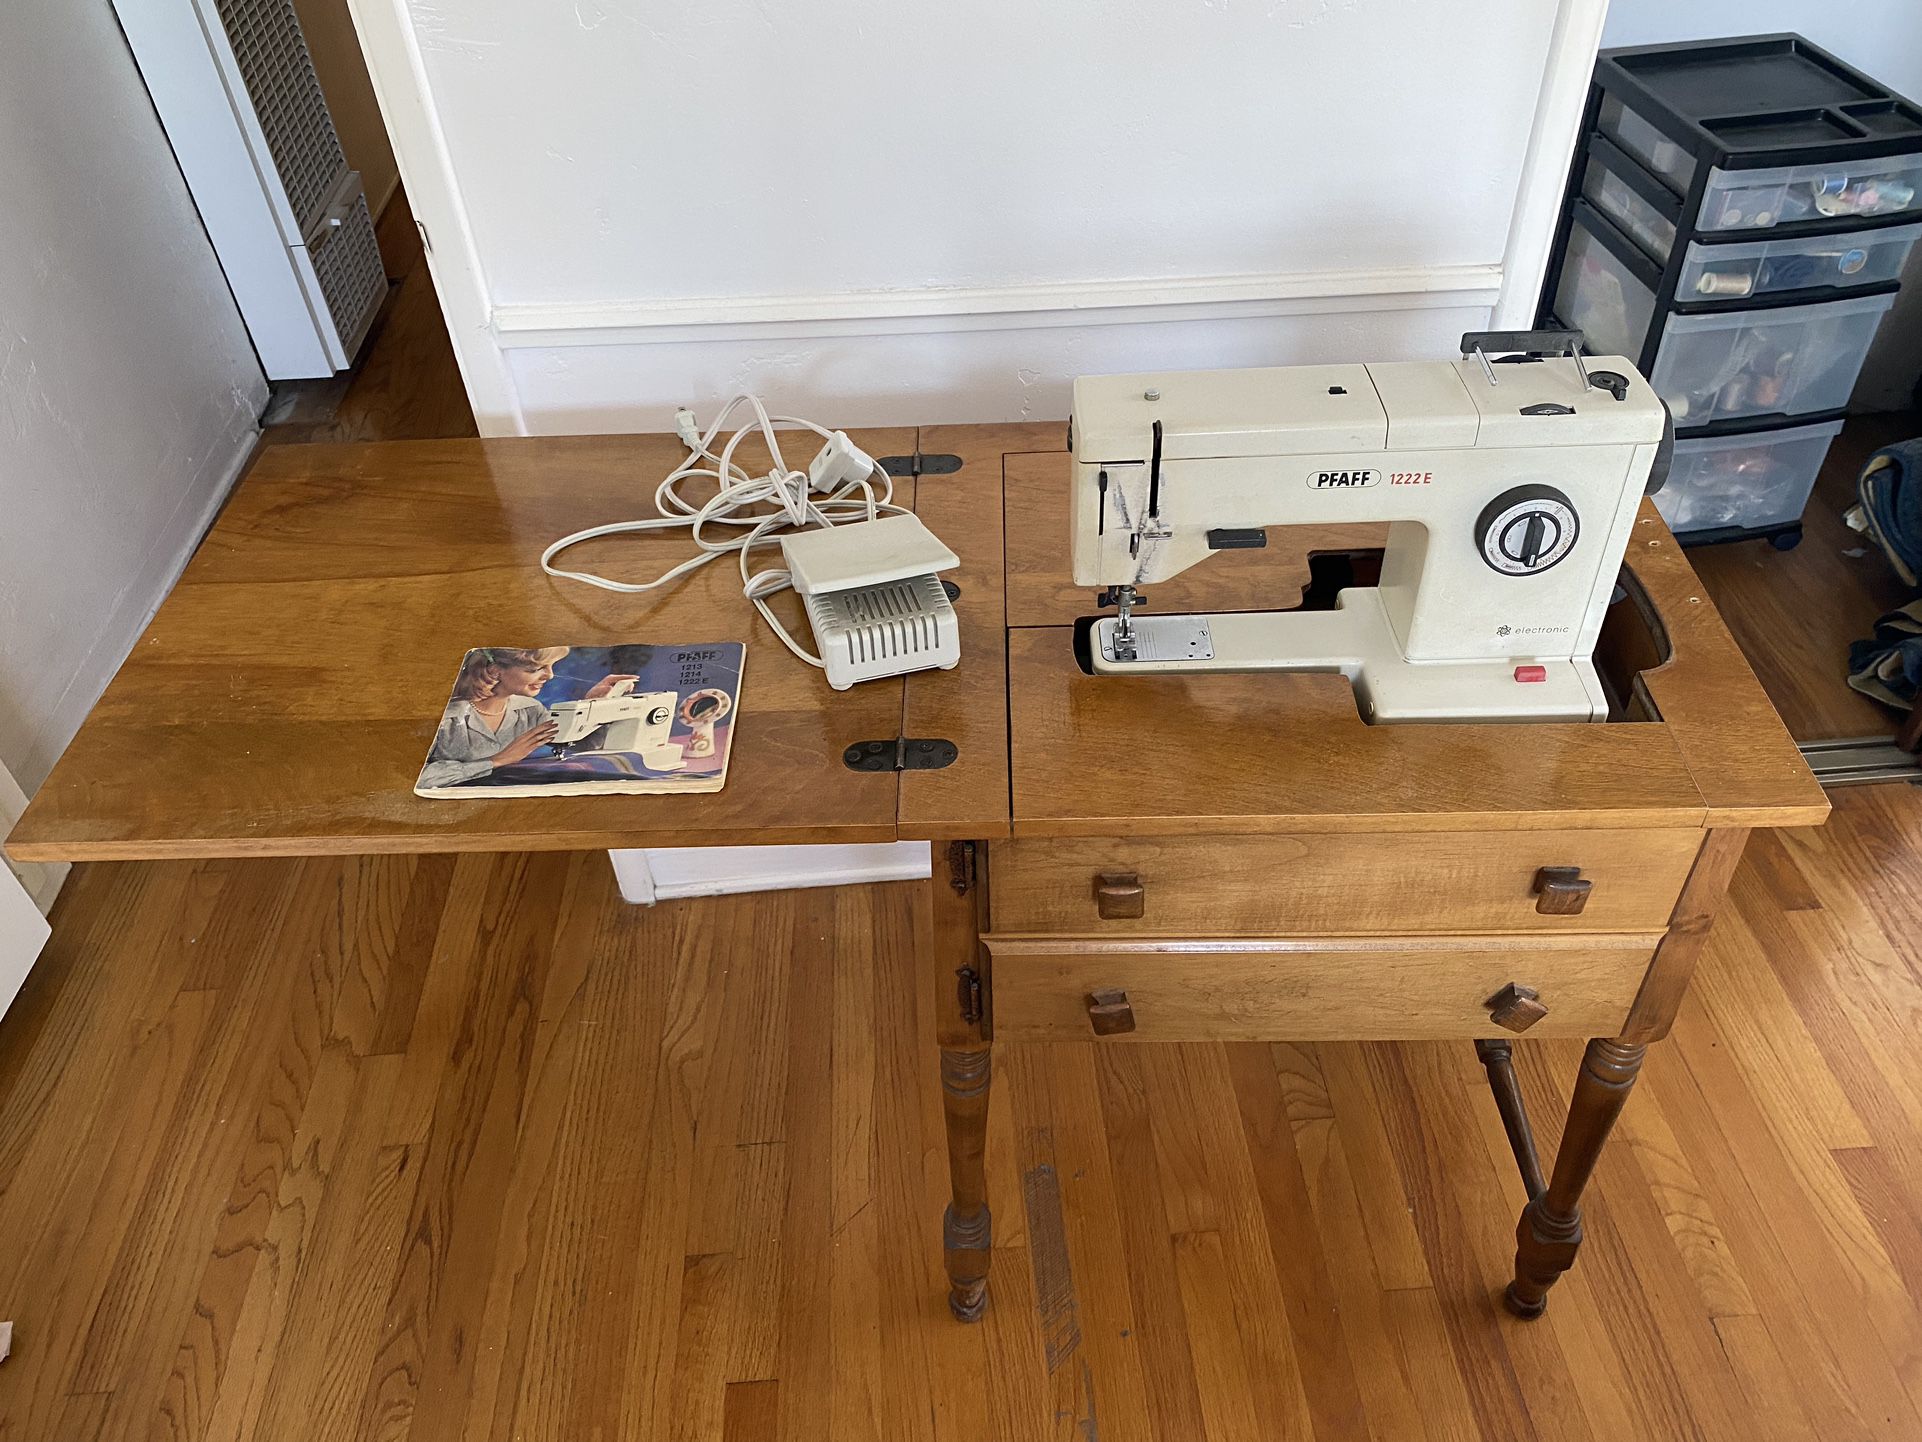 Pfaff 1222 Sewing Machine With Cabinet